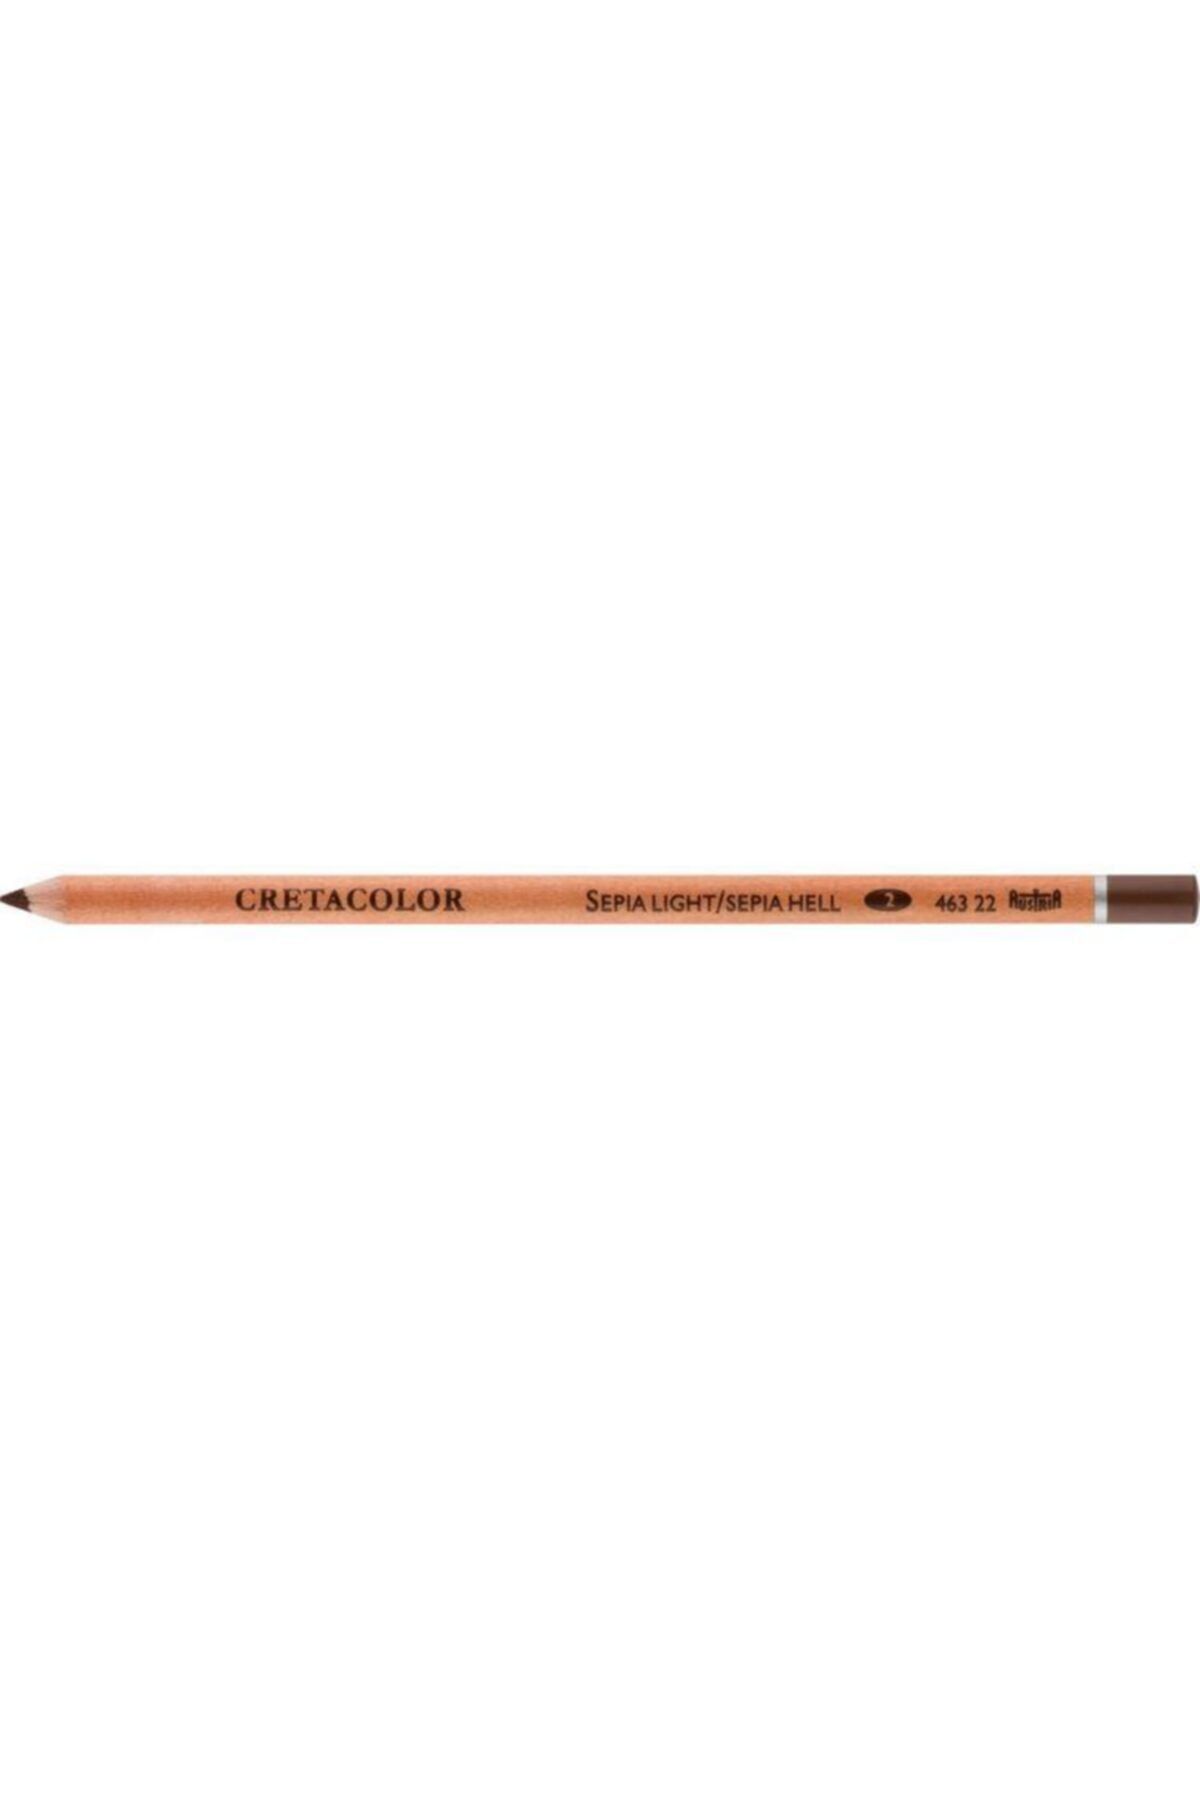 CretaColor Sepia Light Dry Pencil Kuru Tebeşir Kalemi (463 22)